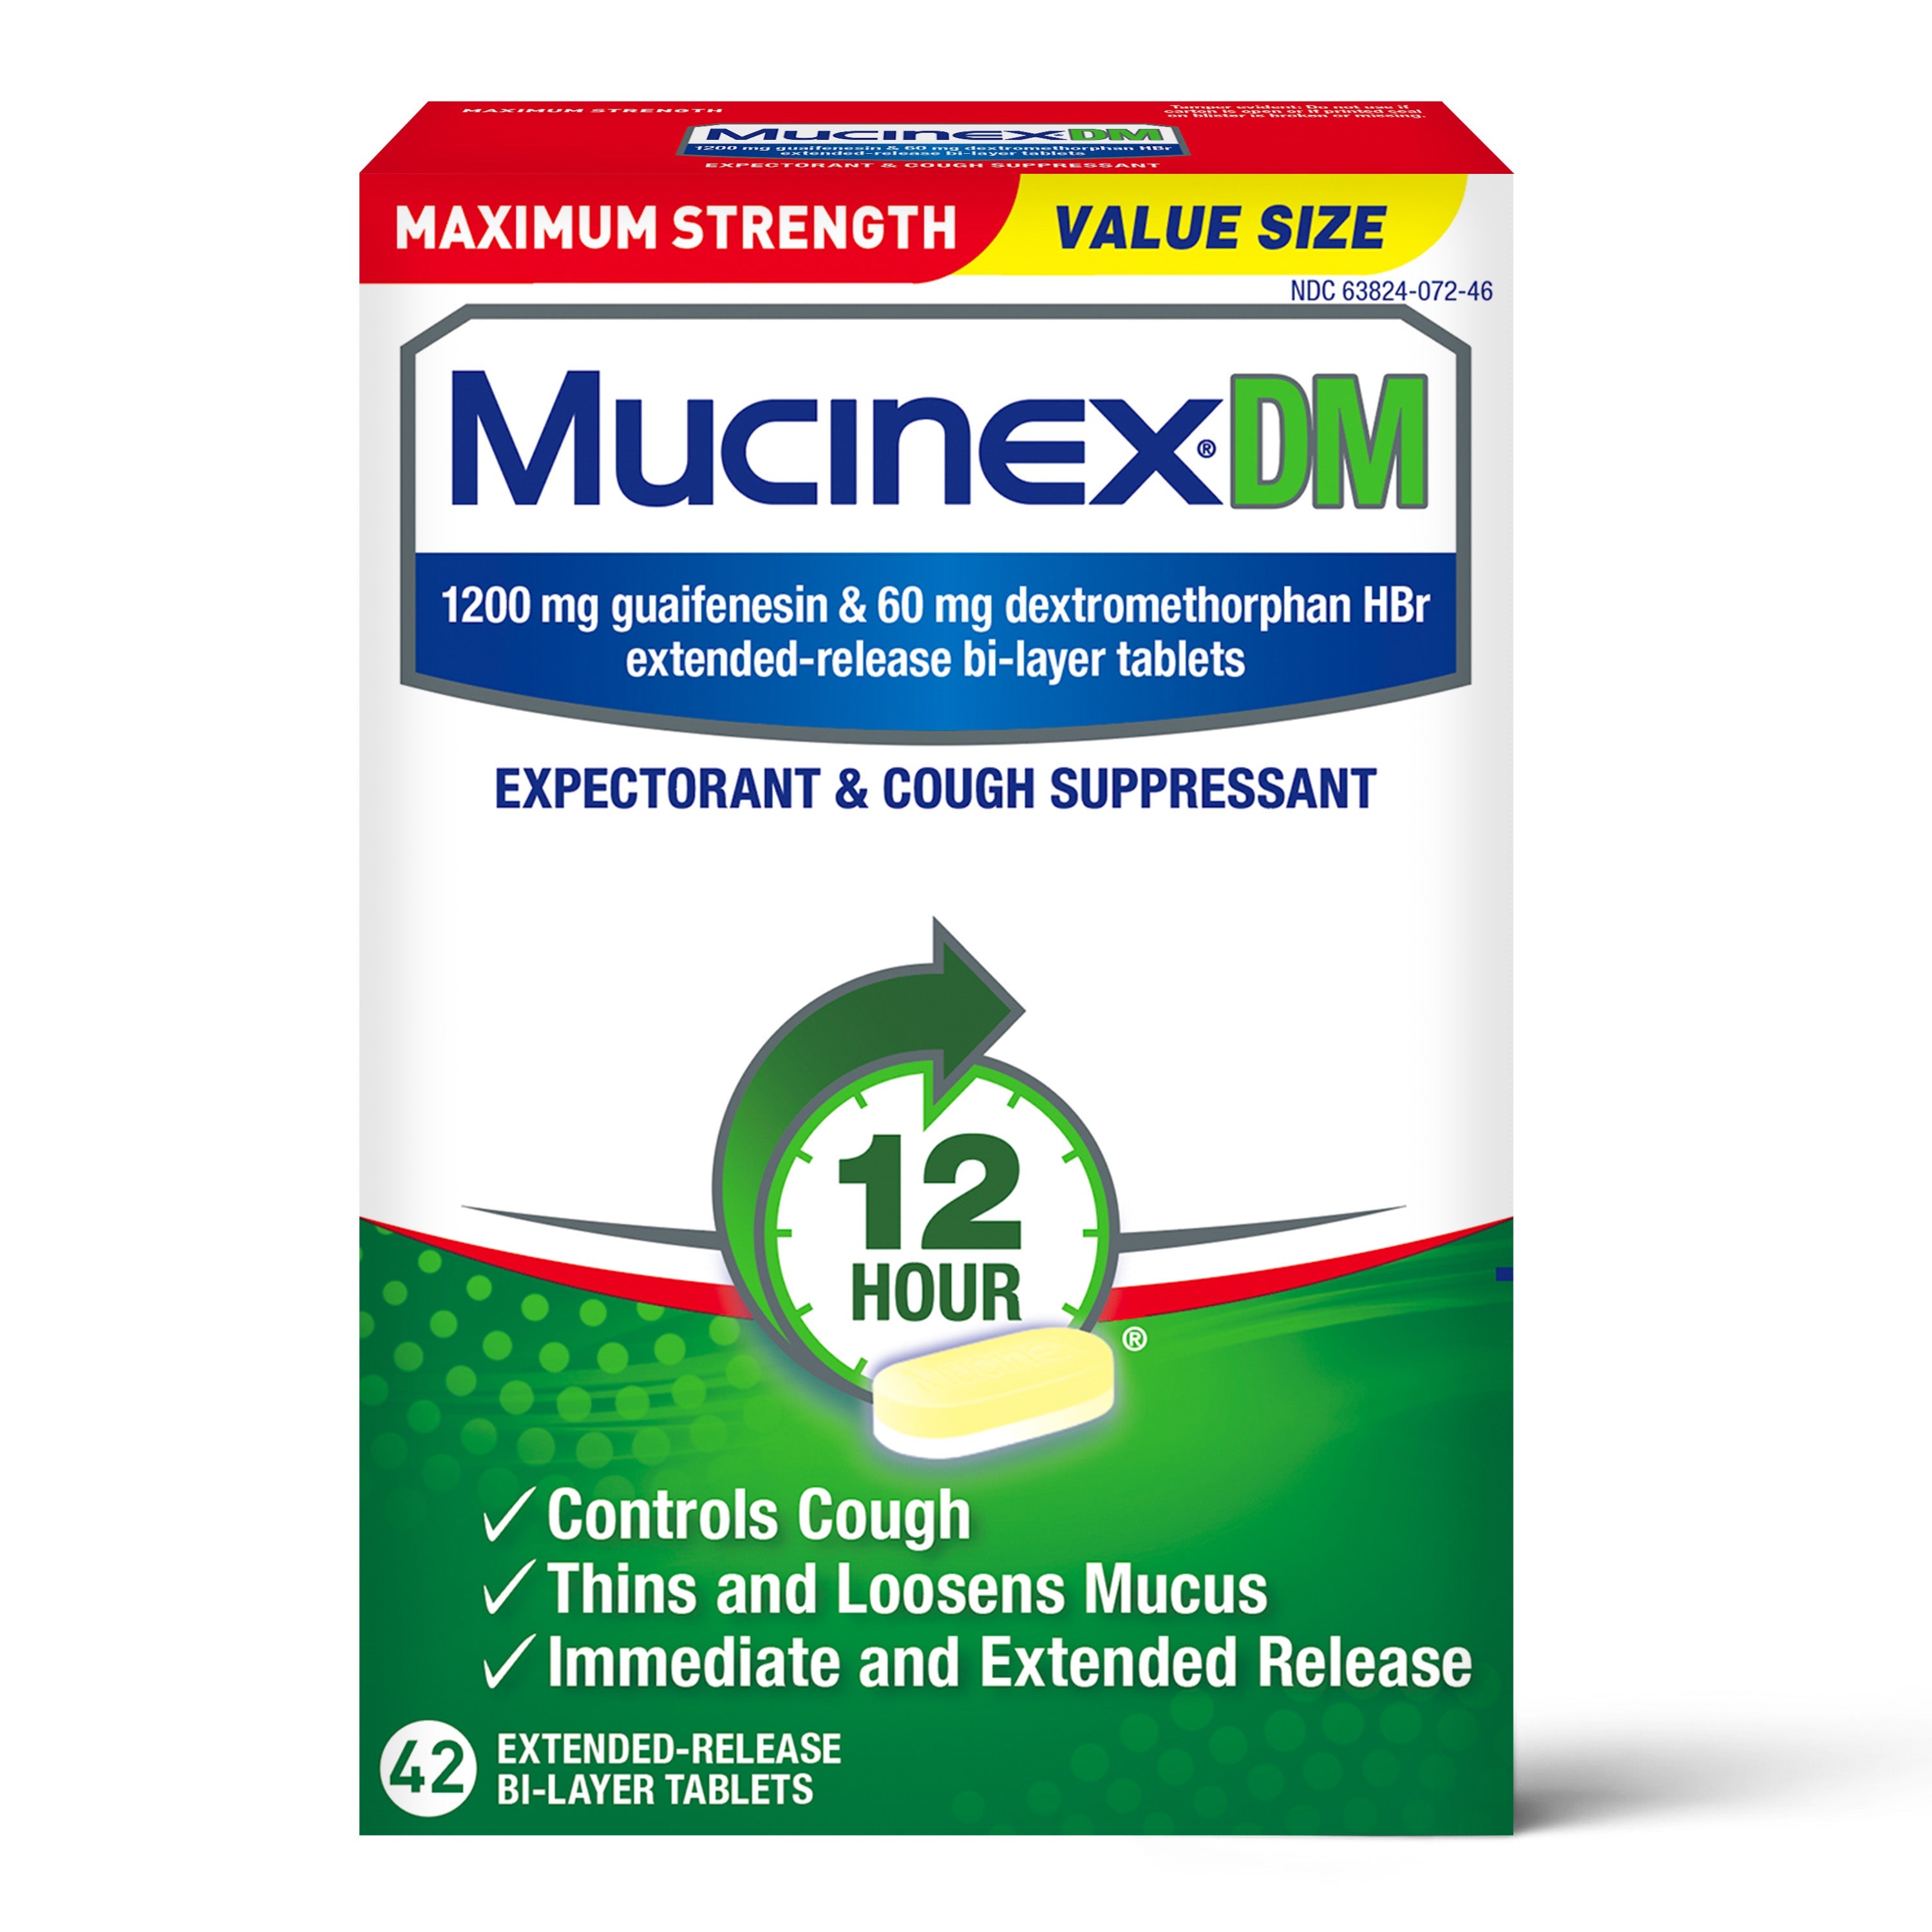 Mucinex DM Maximum Strength 1200mg - 42 Tablets